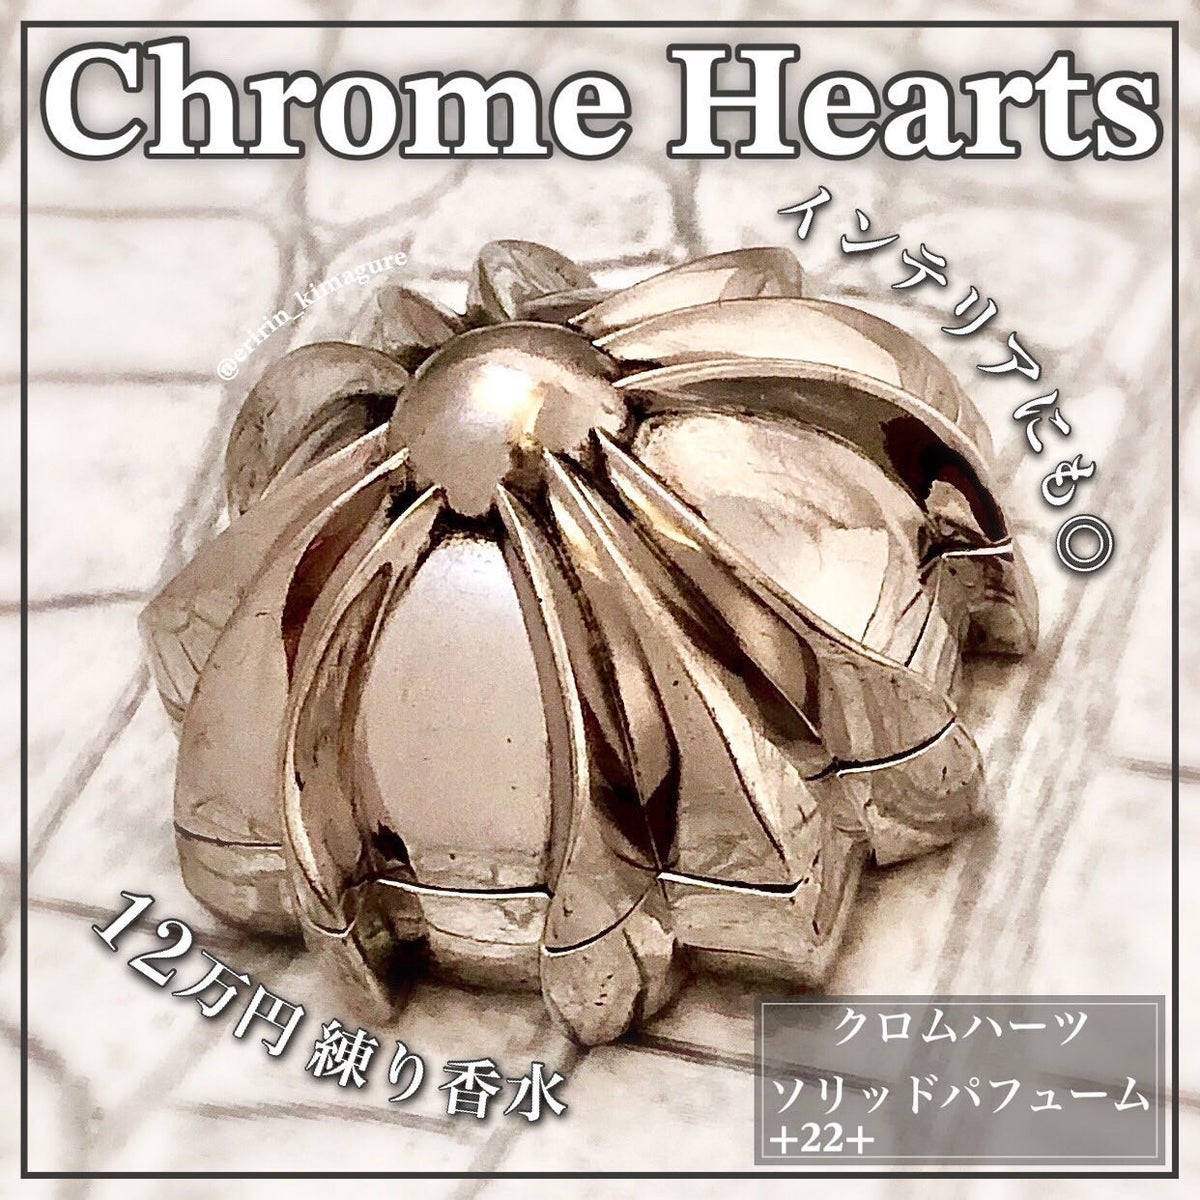 Chrom hearts +22 ソリッドパフューム